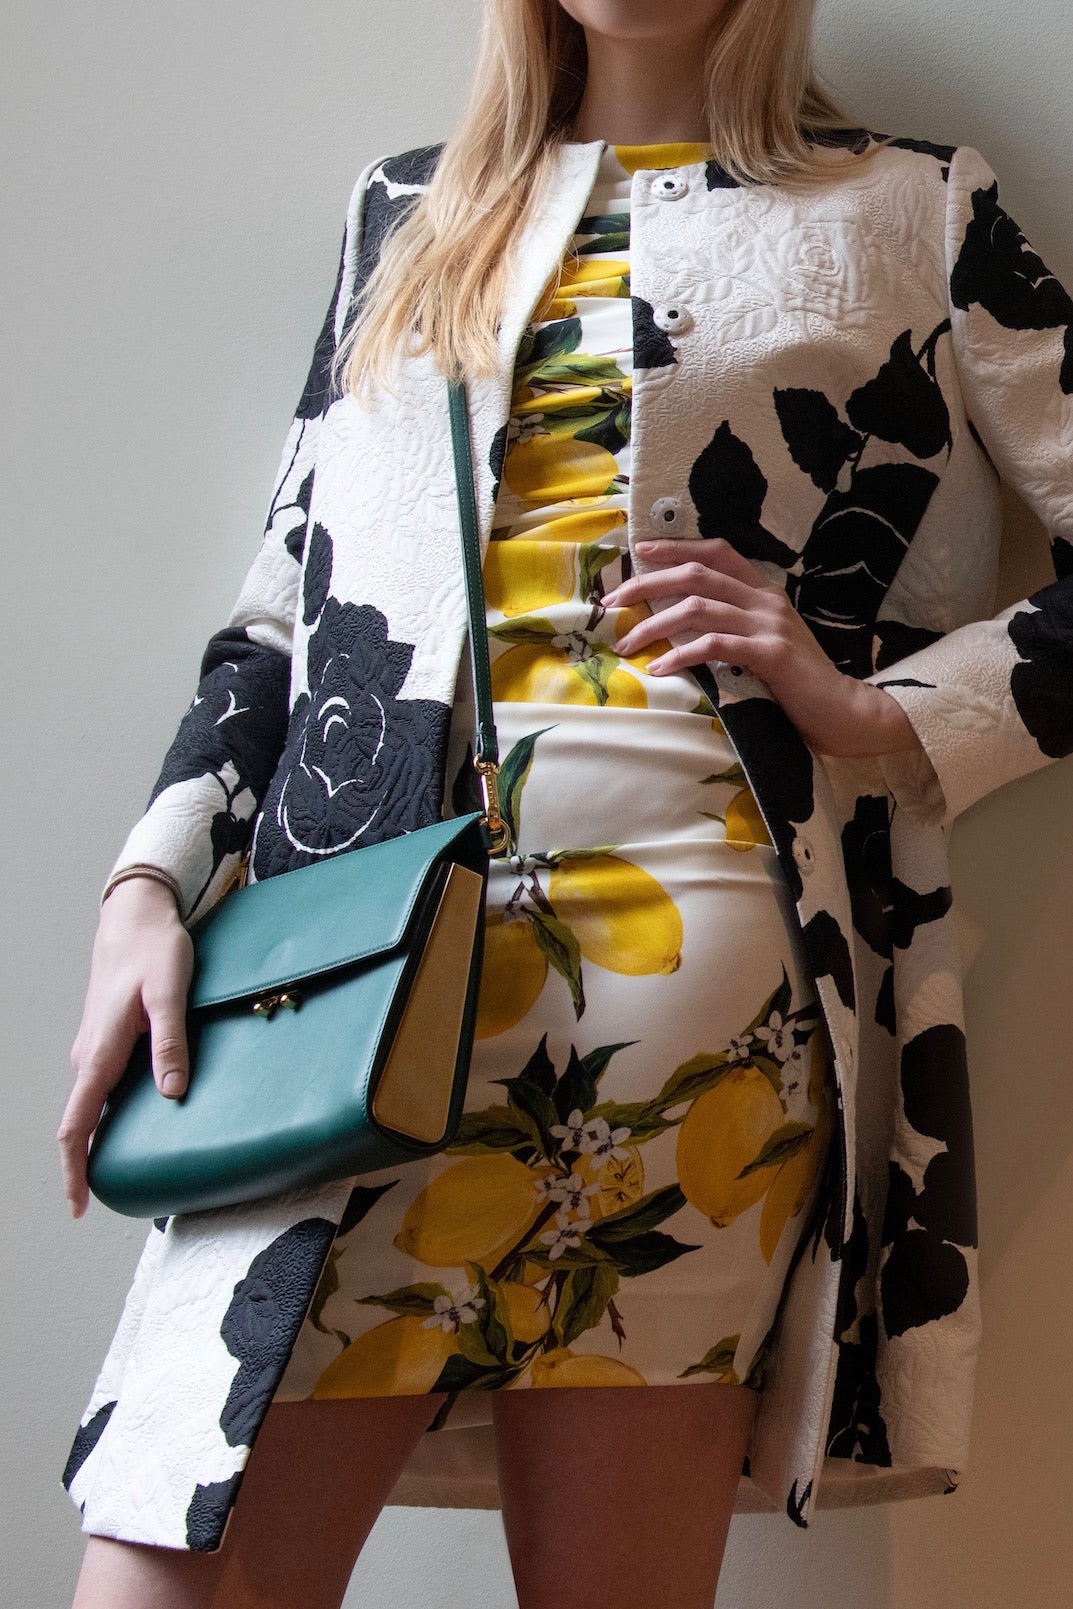 Dolce & Gabbana Lemon Print Silk Ruched Dress Size XS | IT 40 - Love that Bag etc - Preowned Authentic Designer Handbags & Preloved Fashions